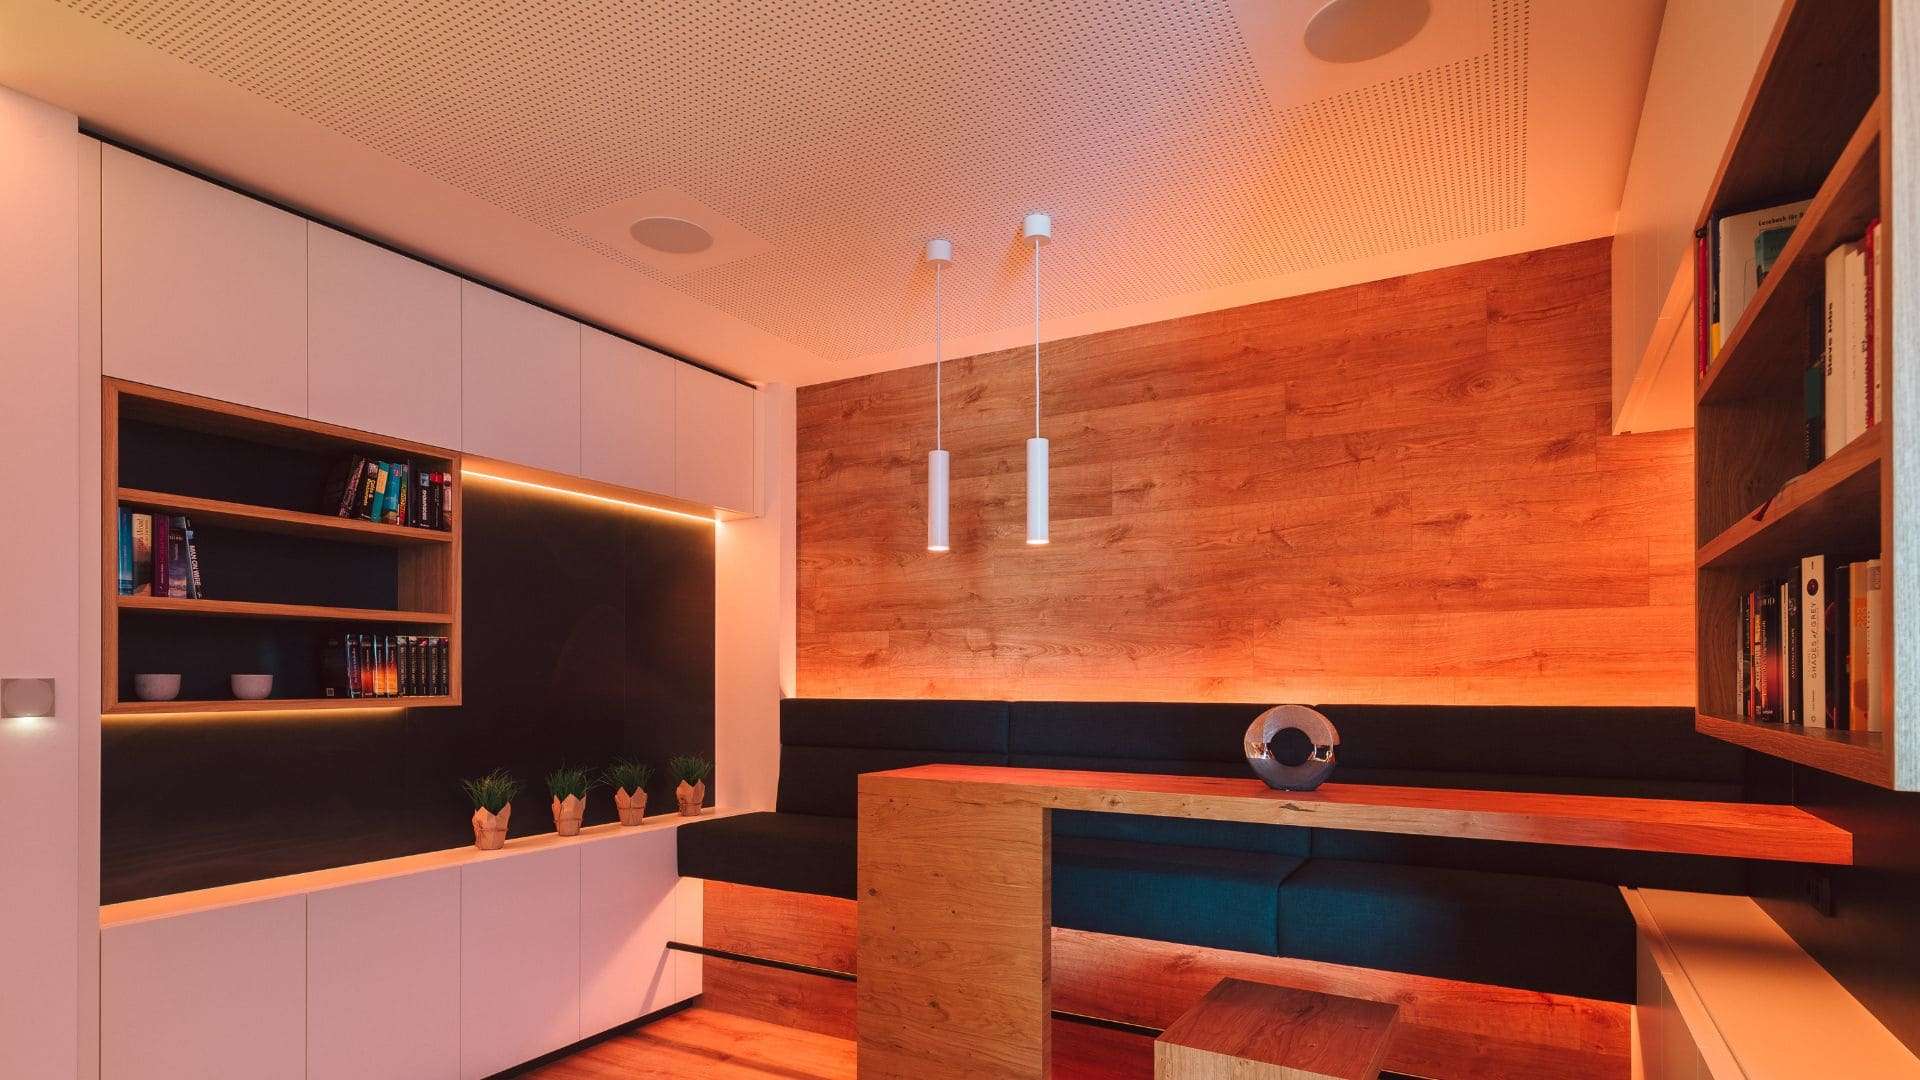 AV solutions that blend seamlessly with interior aesthetic